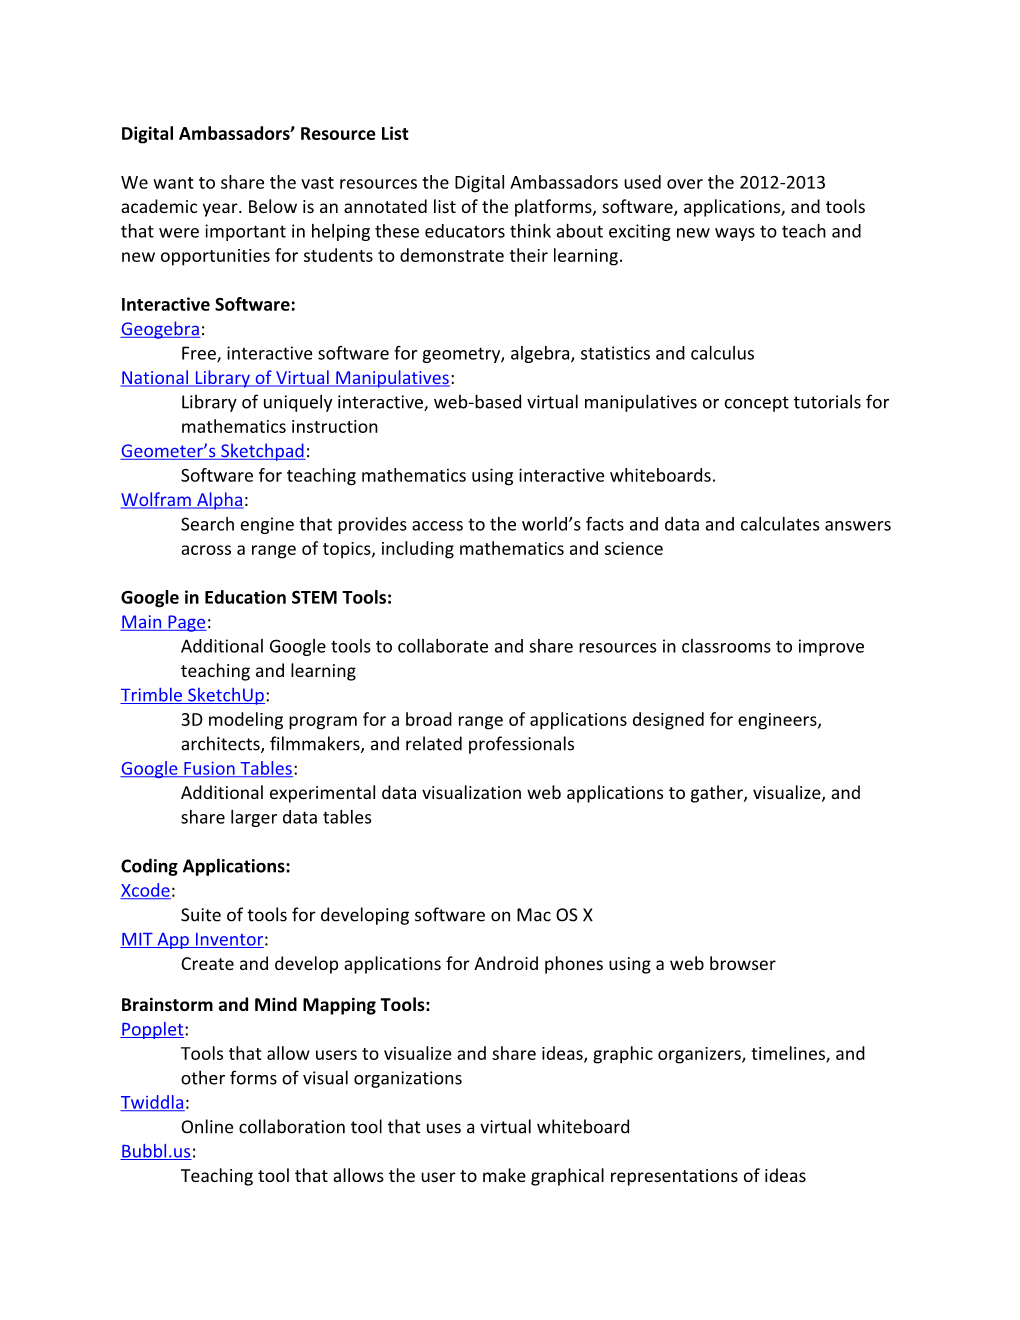 Digital Ambassadors Resource List